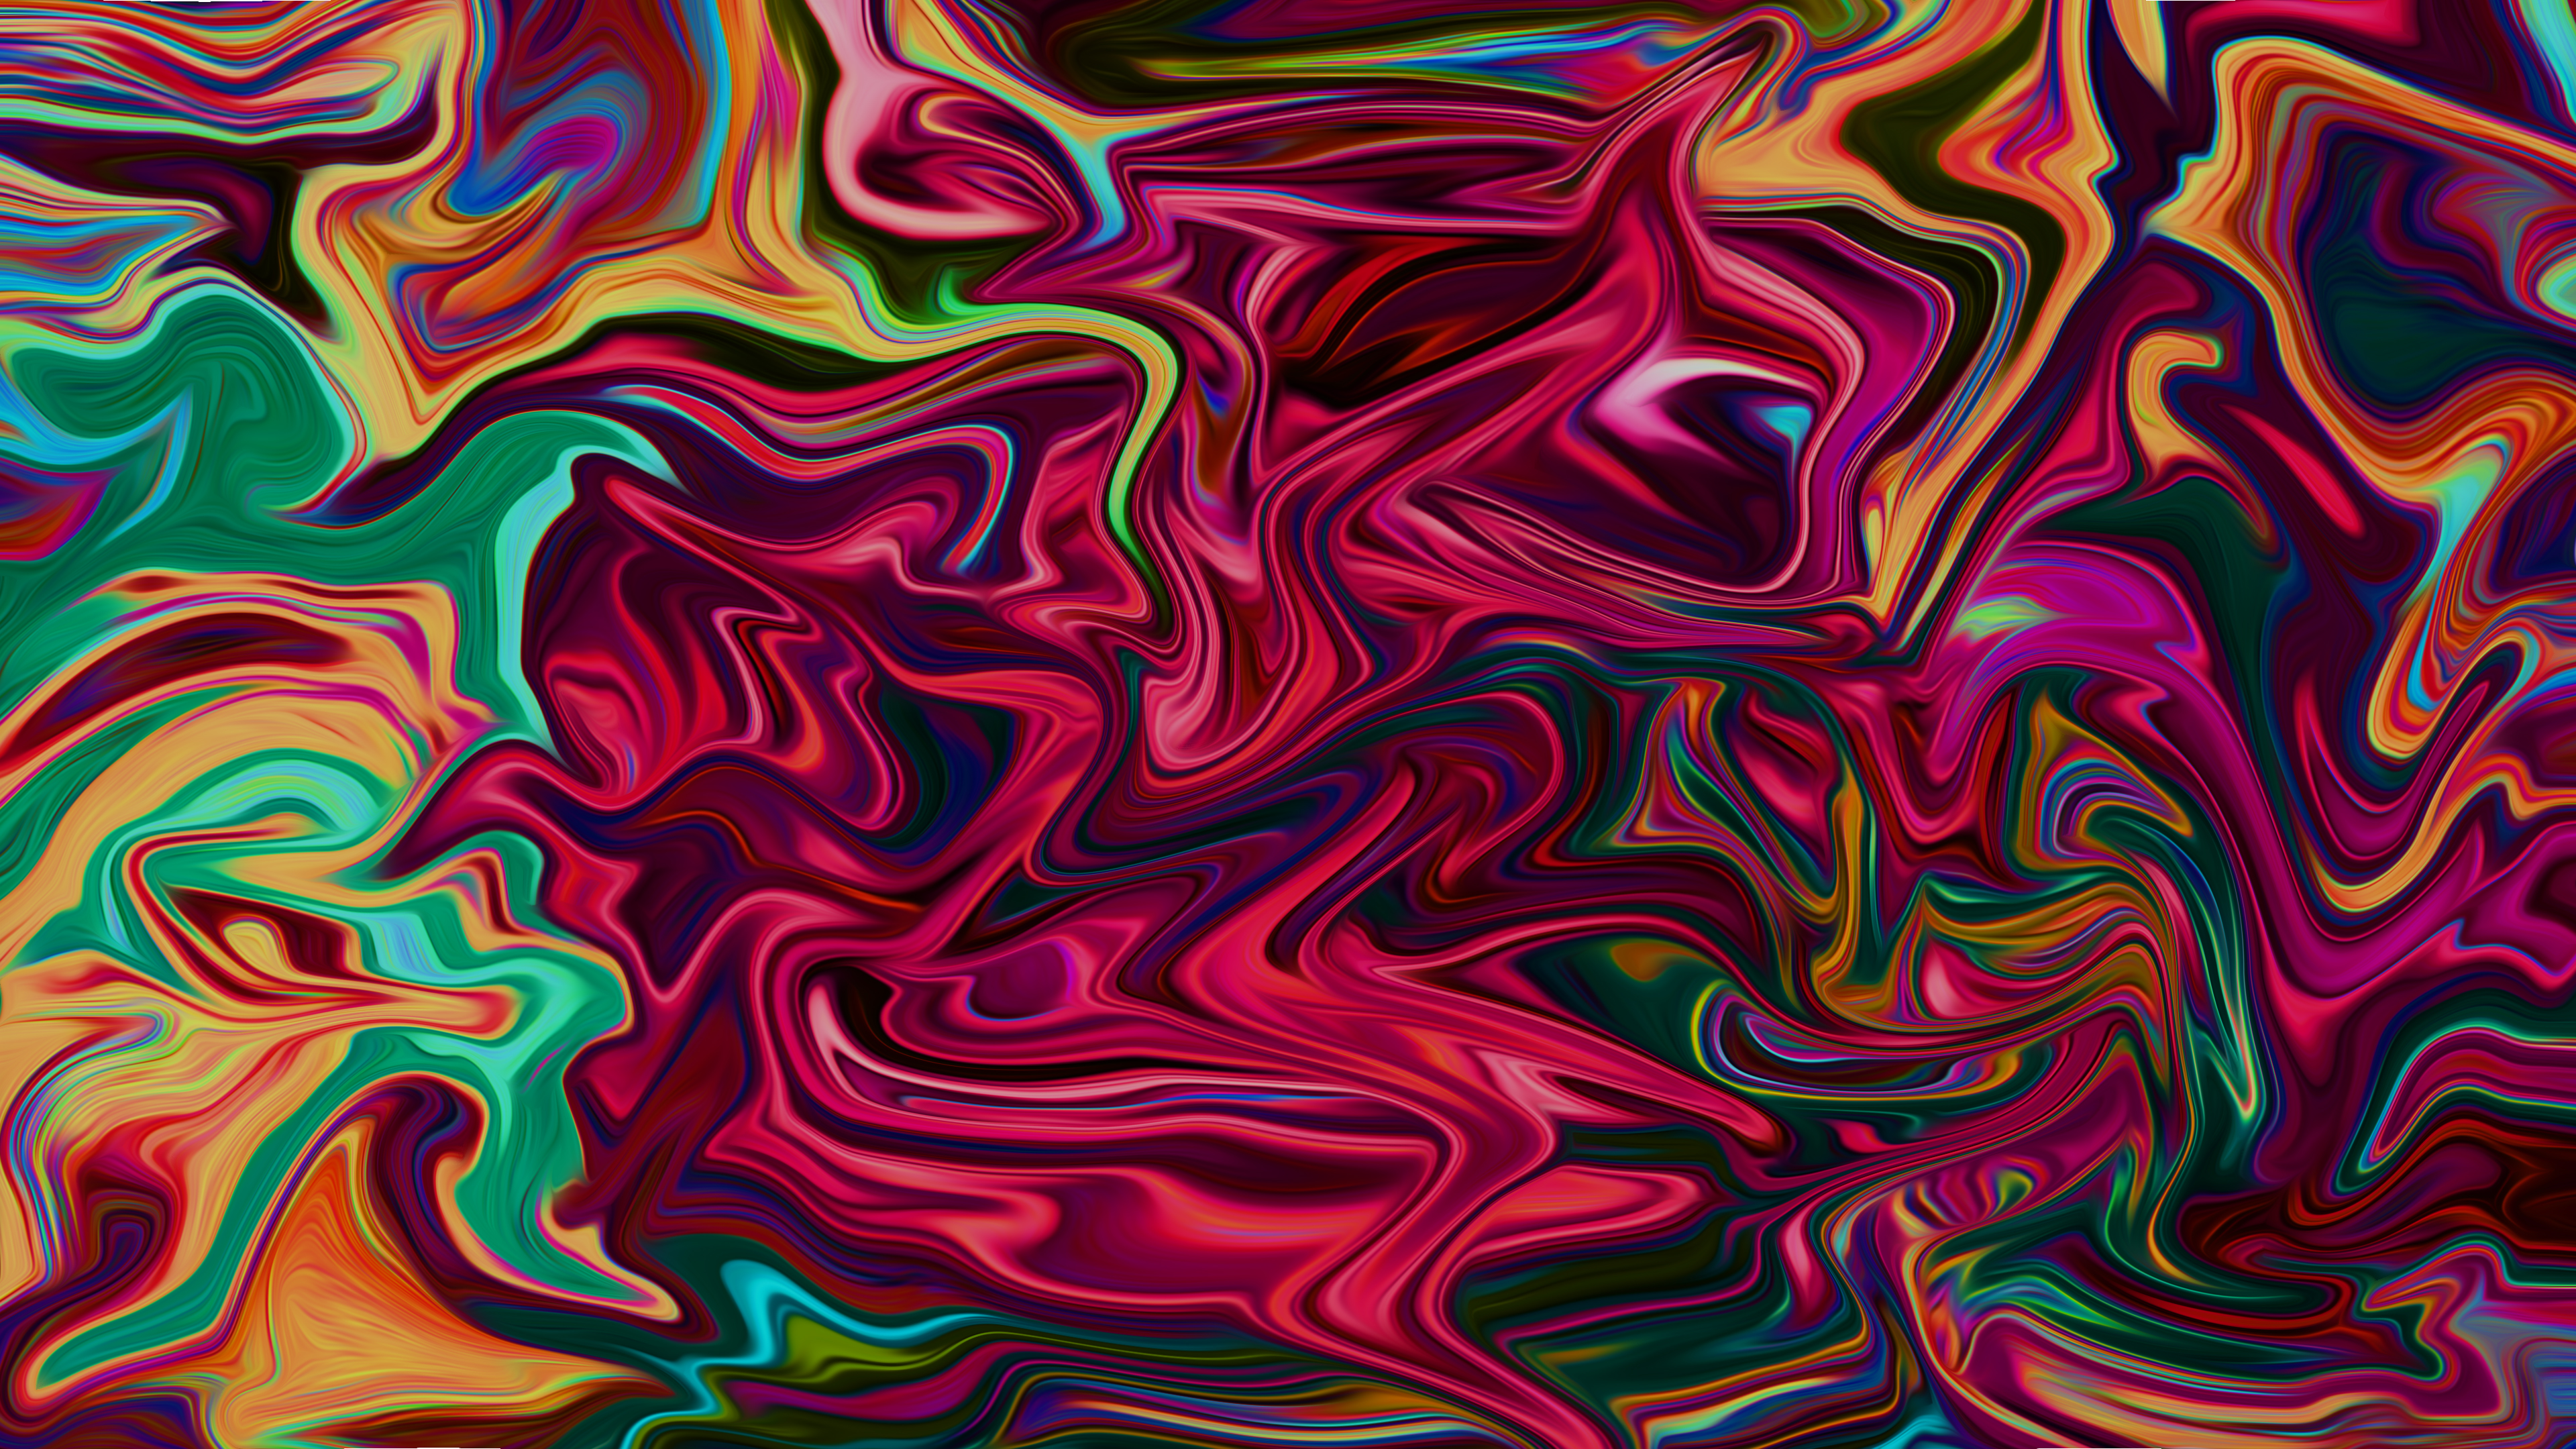 Abstract Fluid Liquid Colorful Artwork Digital Art Shapes Paint Brushes 8 K 3840x2160